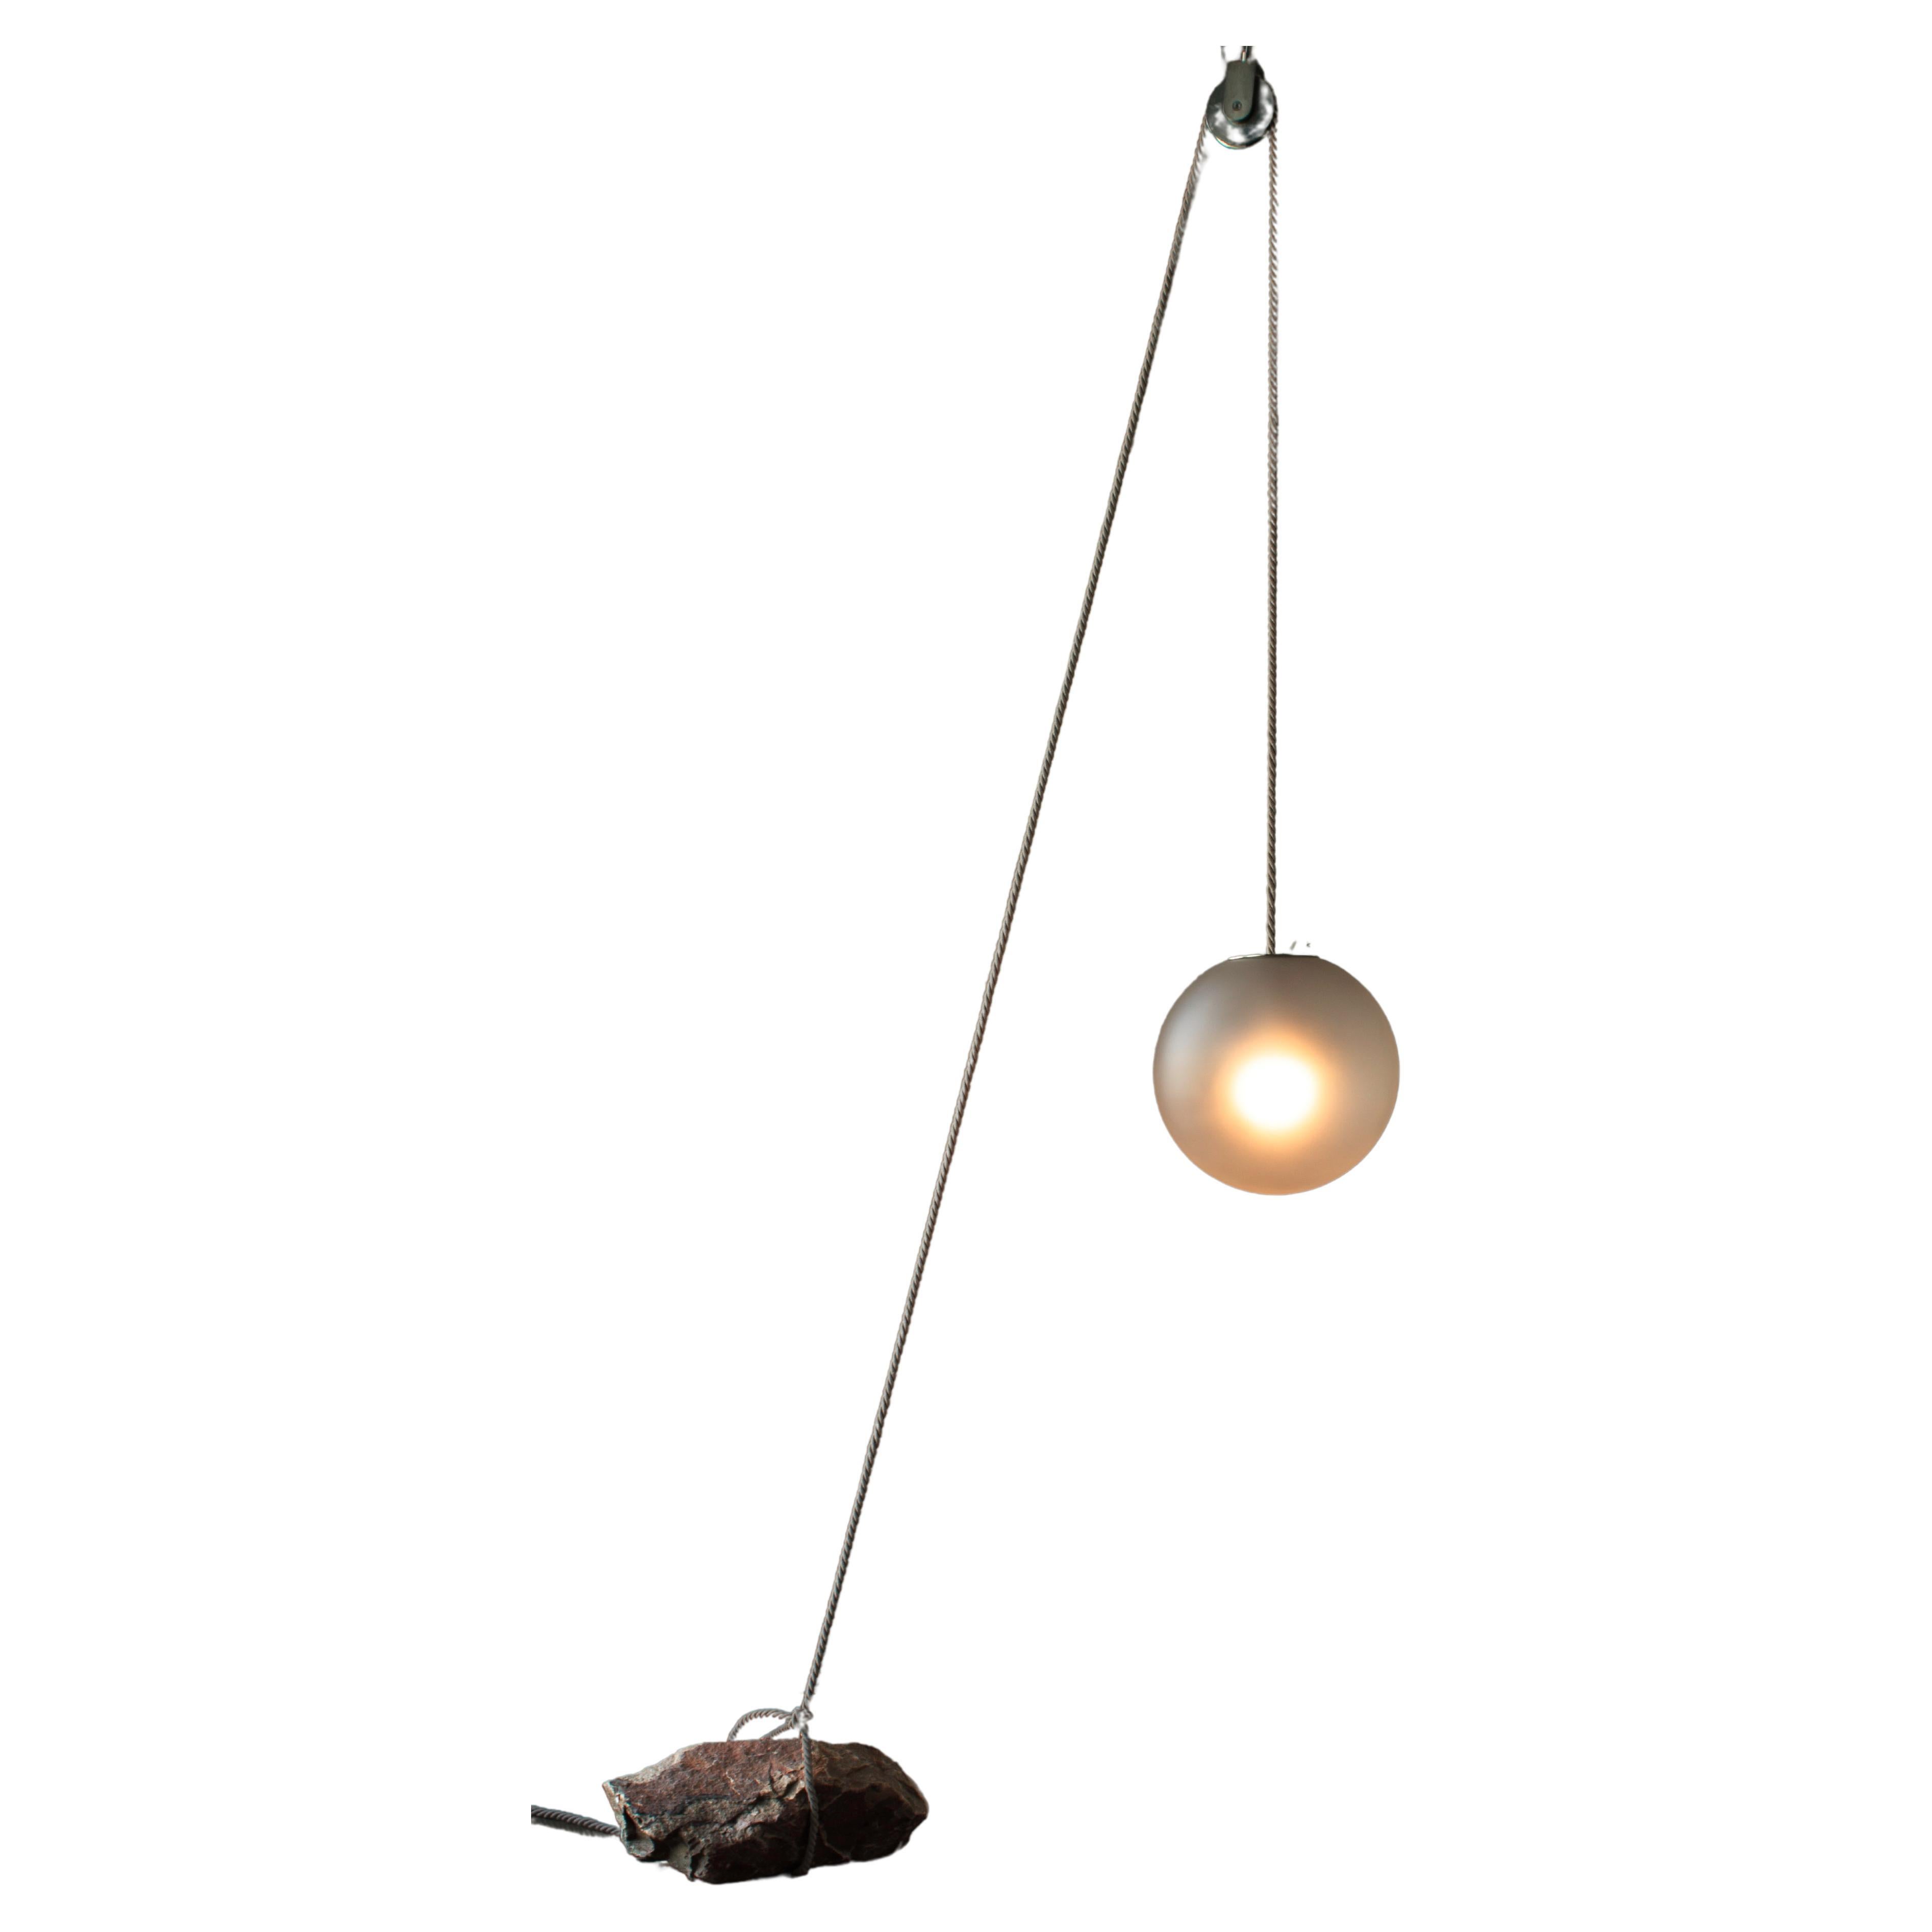 Beacon of Light D30 Glass Ball Sculptural Natural Stone Pendant Floor Lamp